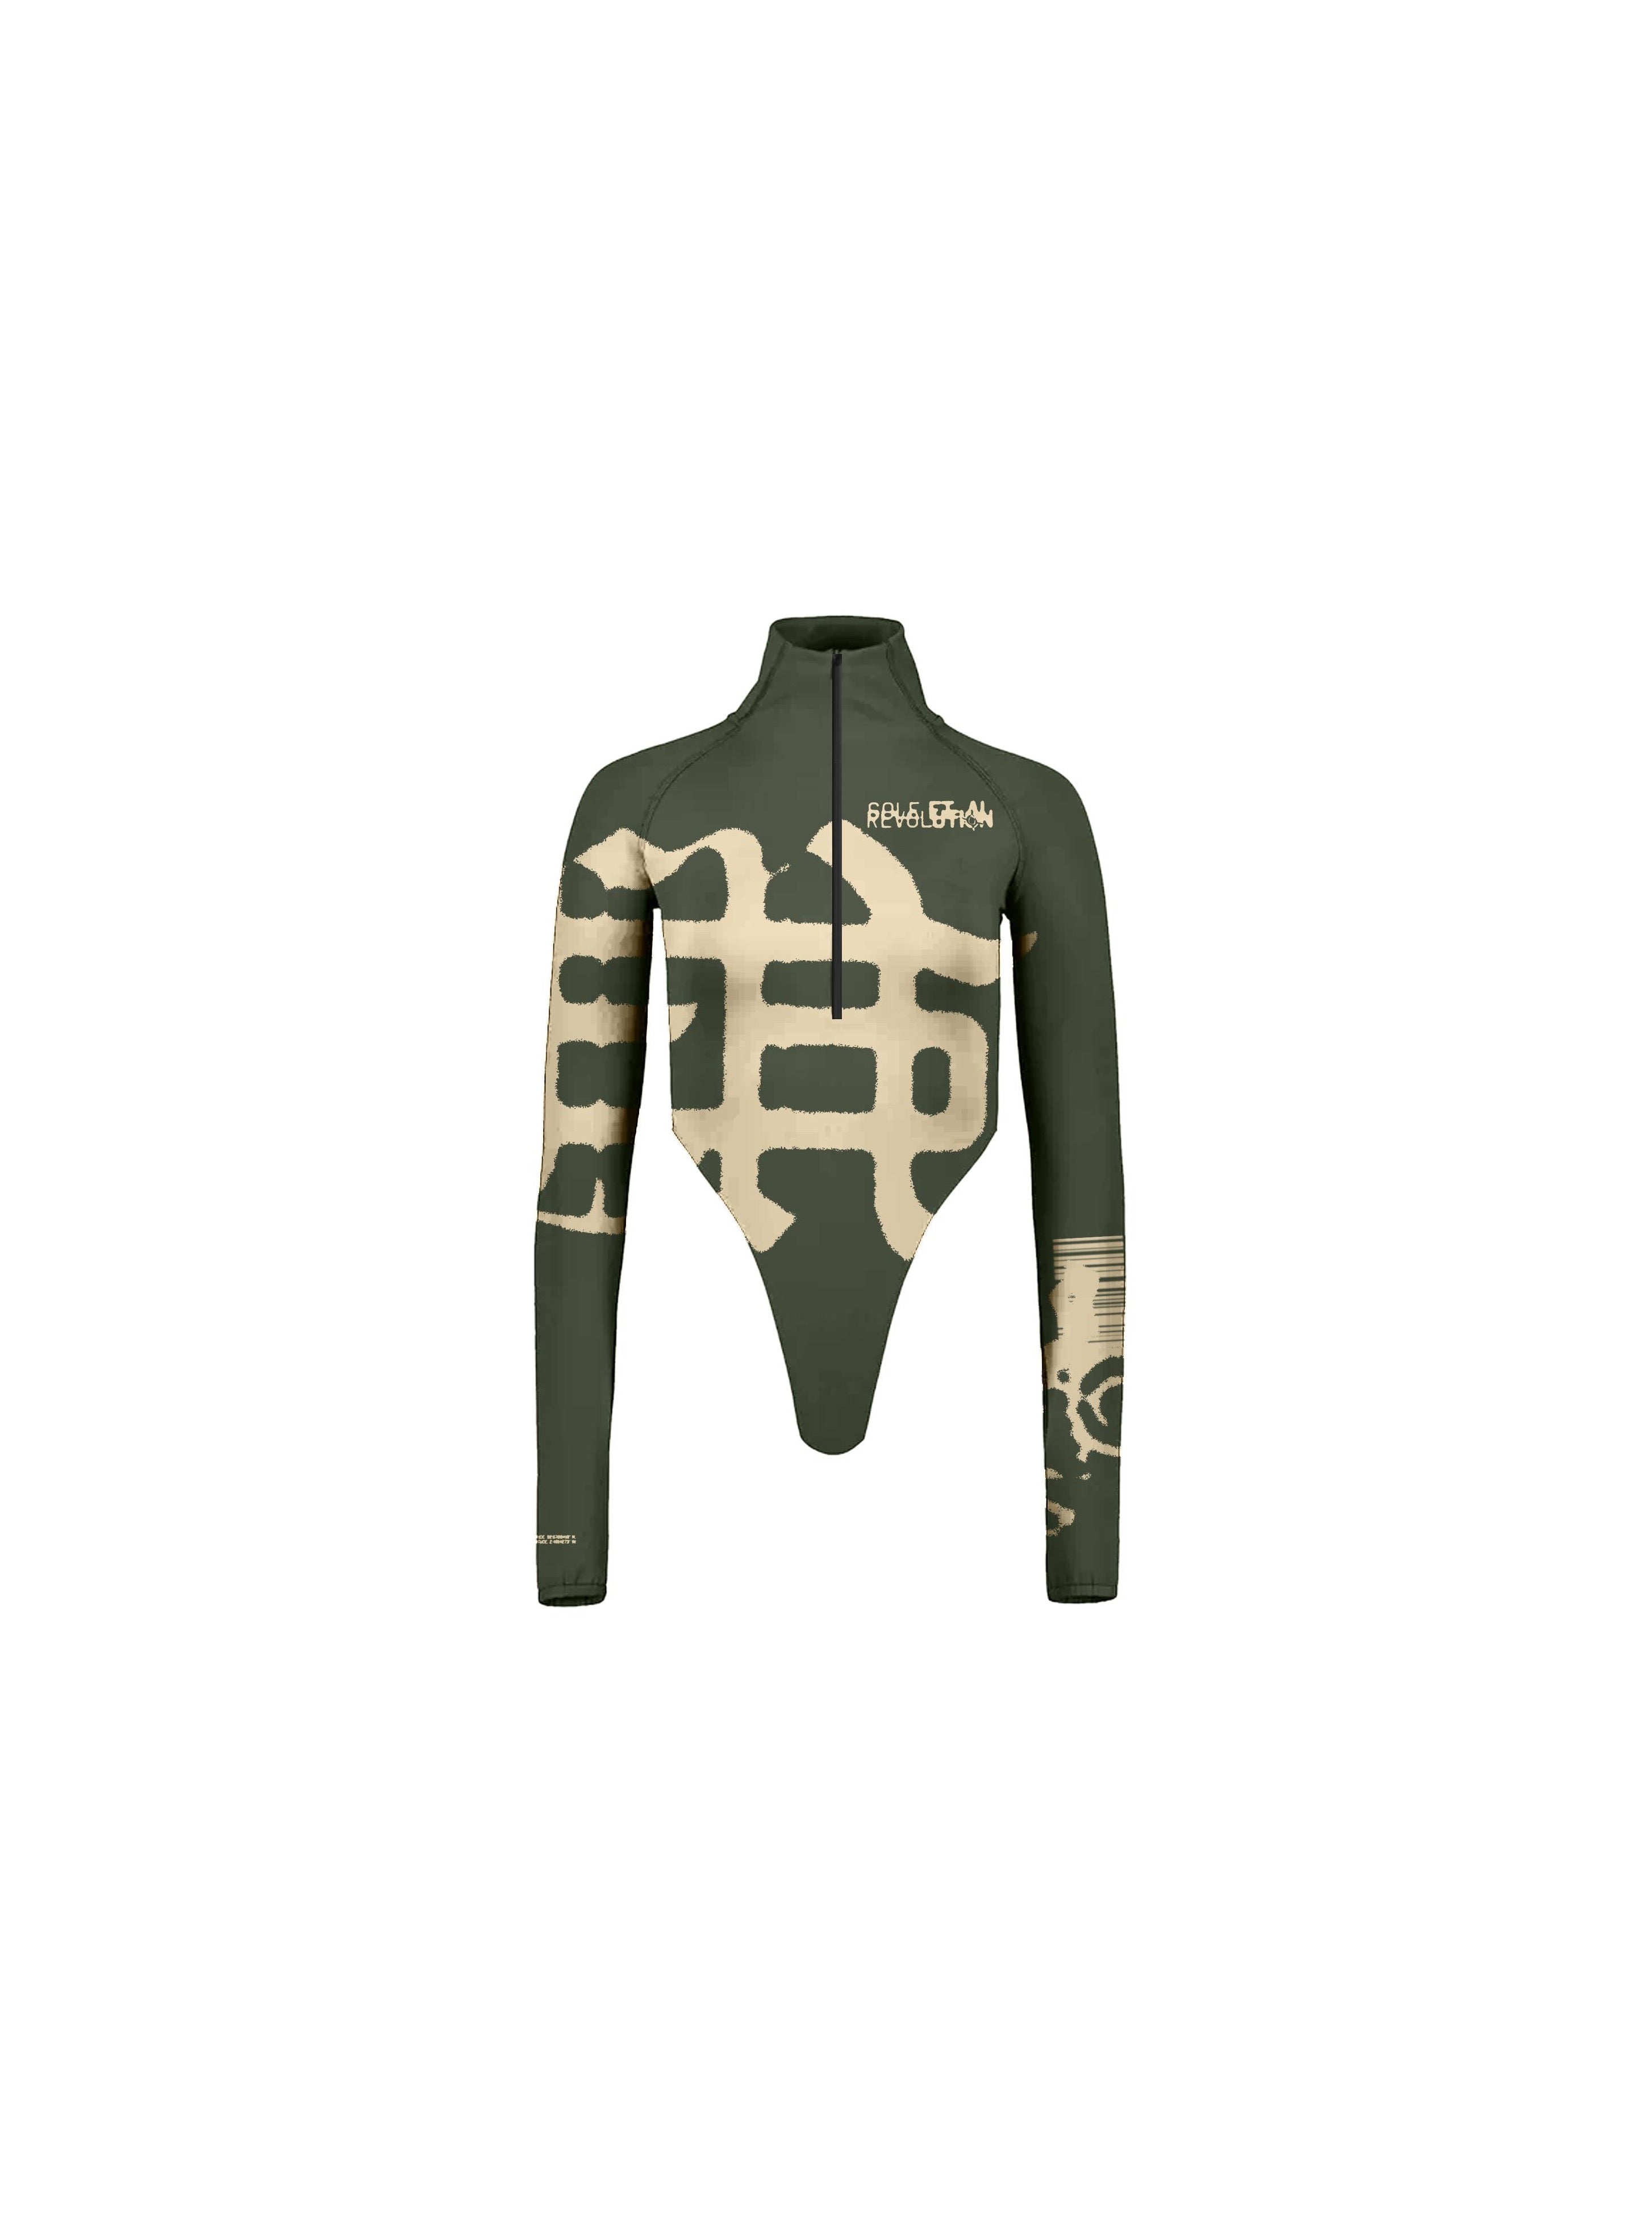 Sole et. Al Revølutiøn Zip Bodysuit : Militærgrønn / Sand